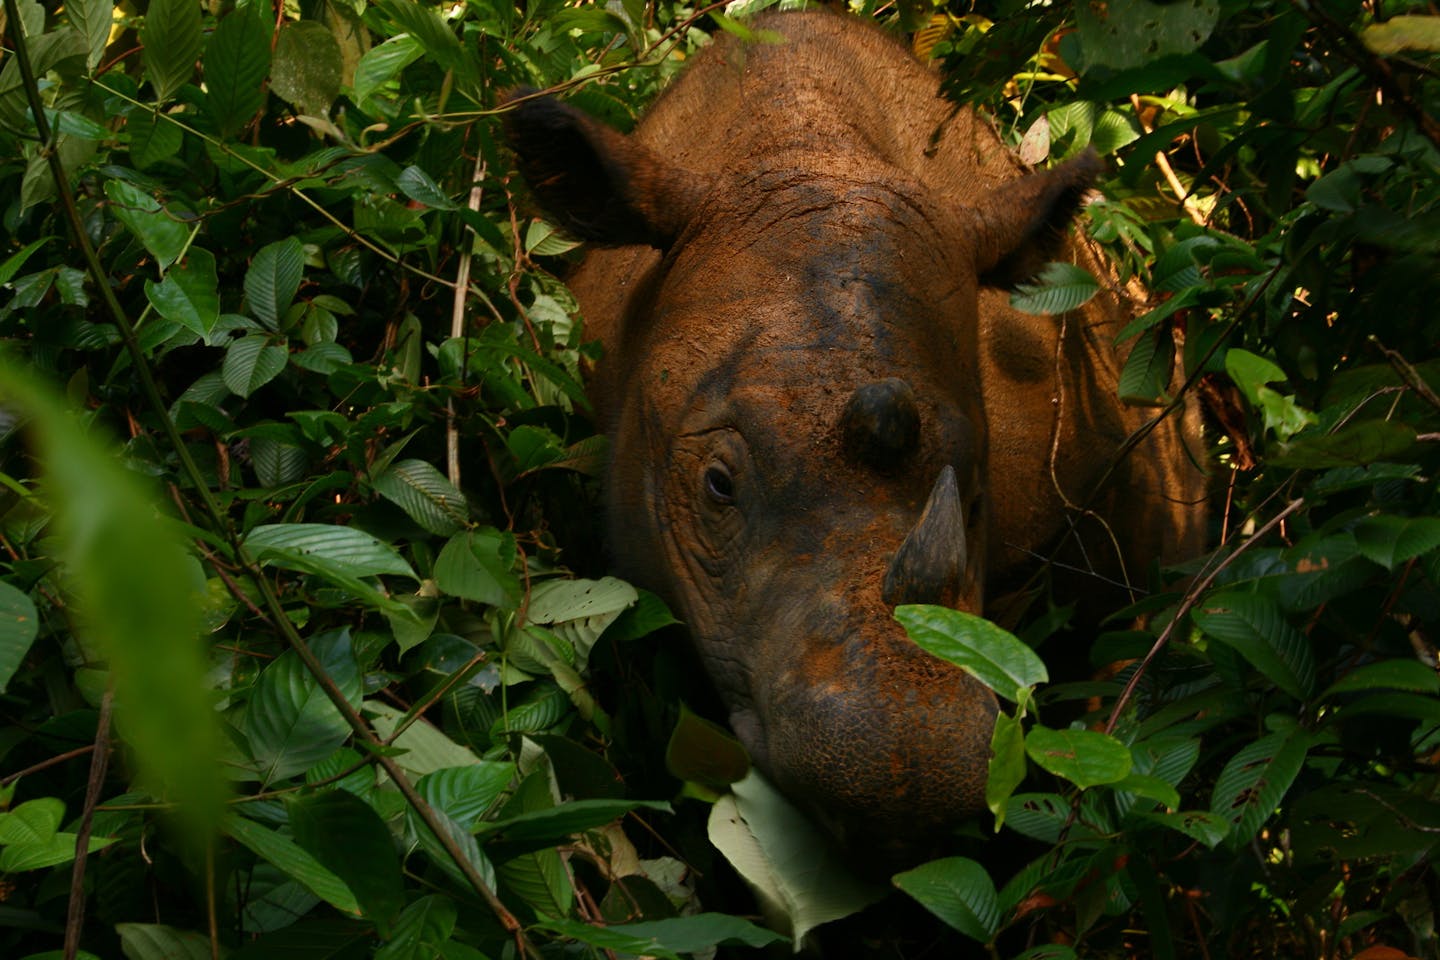 Less than 50 Sumatran rhinos left in the wild, new survey